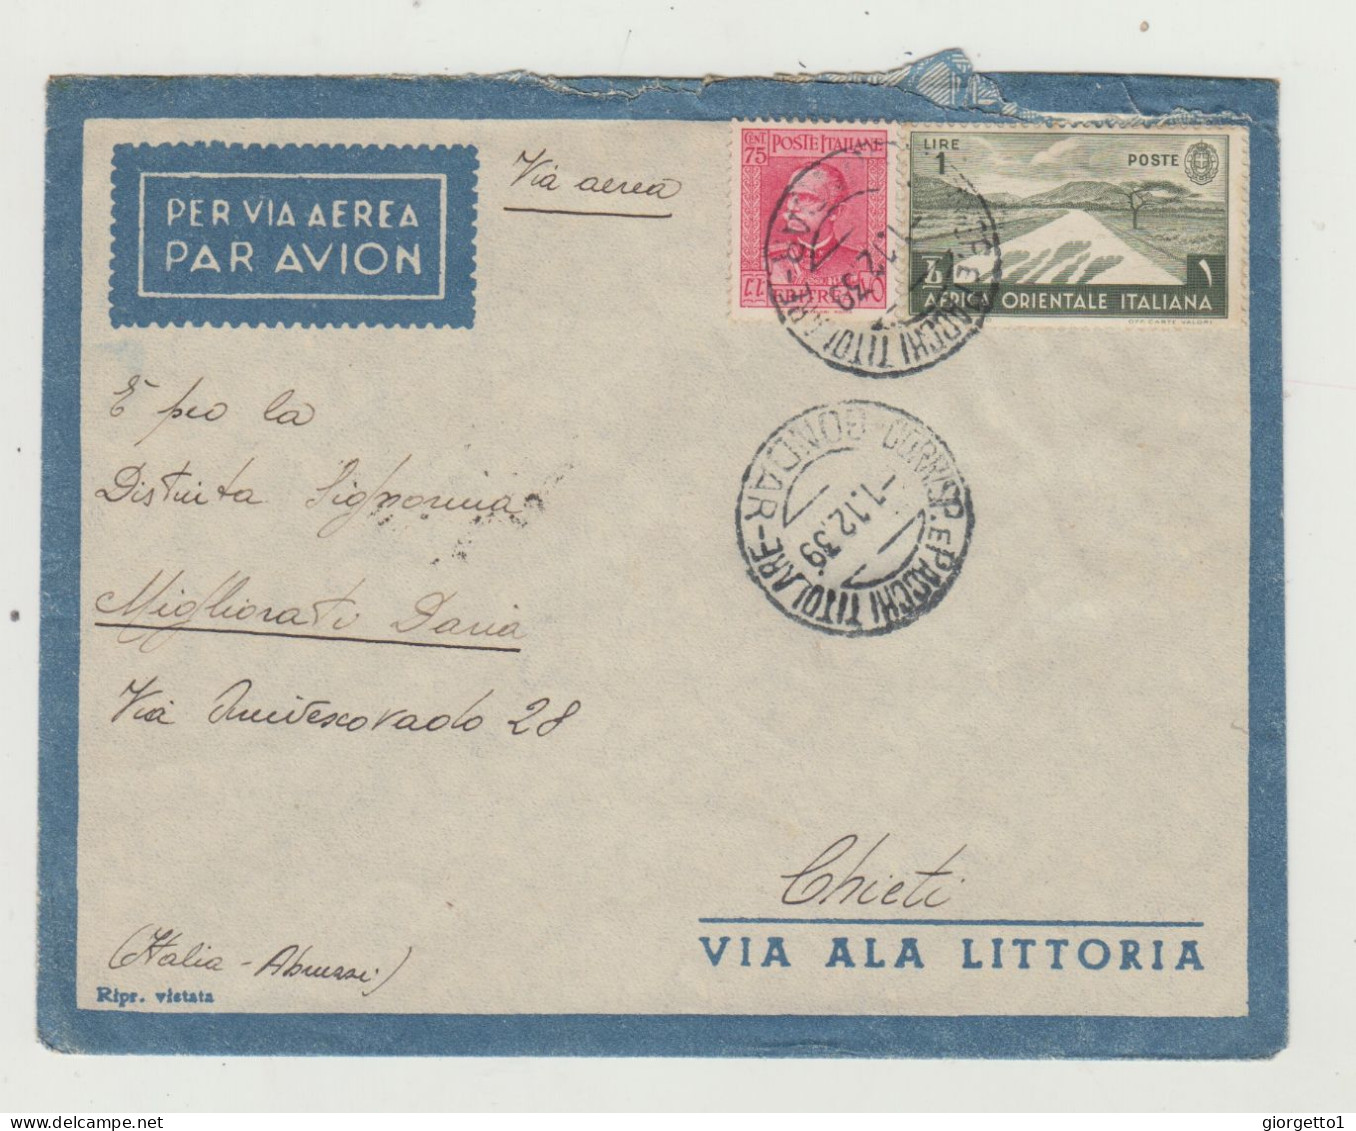 BUSTA SENZA LETTERA -VIA ALA LITTORIA - ANNULLO GONDAR DEL 1939 - AFRICA ORIENTALE ITALIANA A.O.I. WW2 - Marcophilie (Avions)